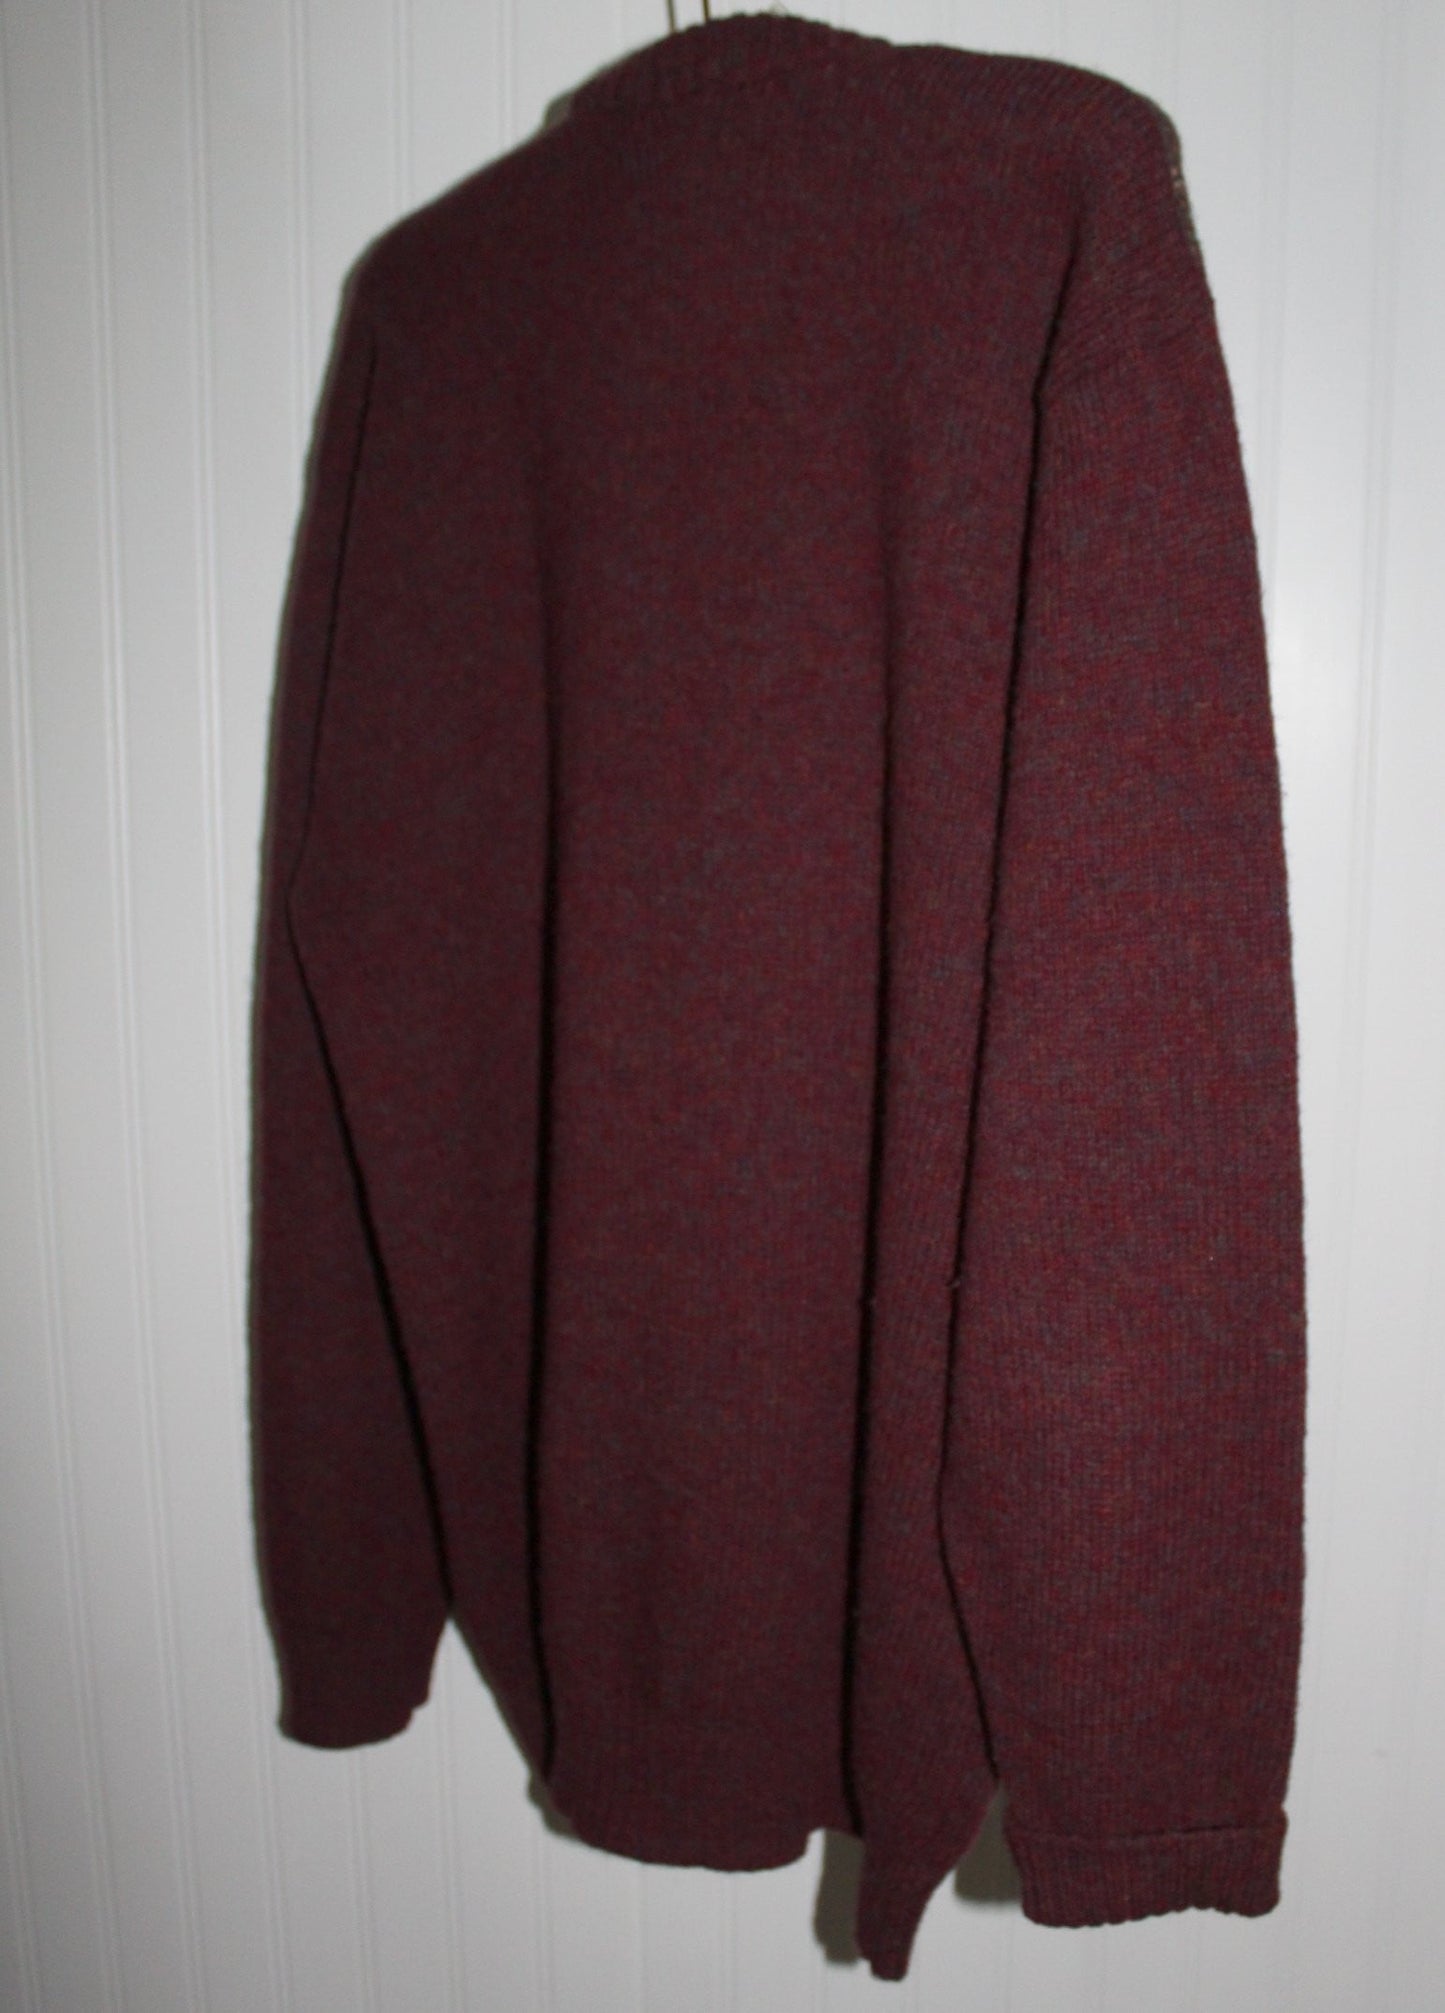 ST MICHAEL UK Sweater Pullover Jumper Maroon Argyle Pattern Size 42 Vintage soft